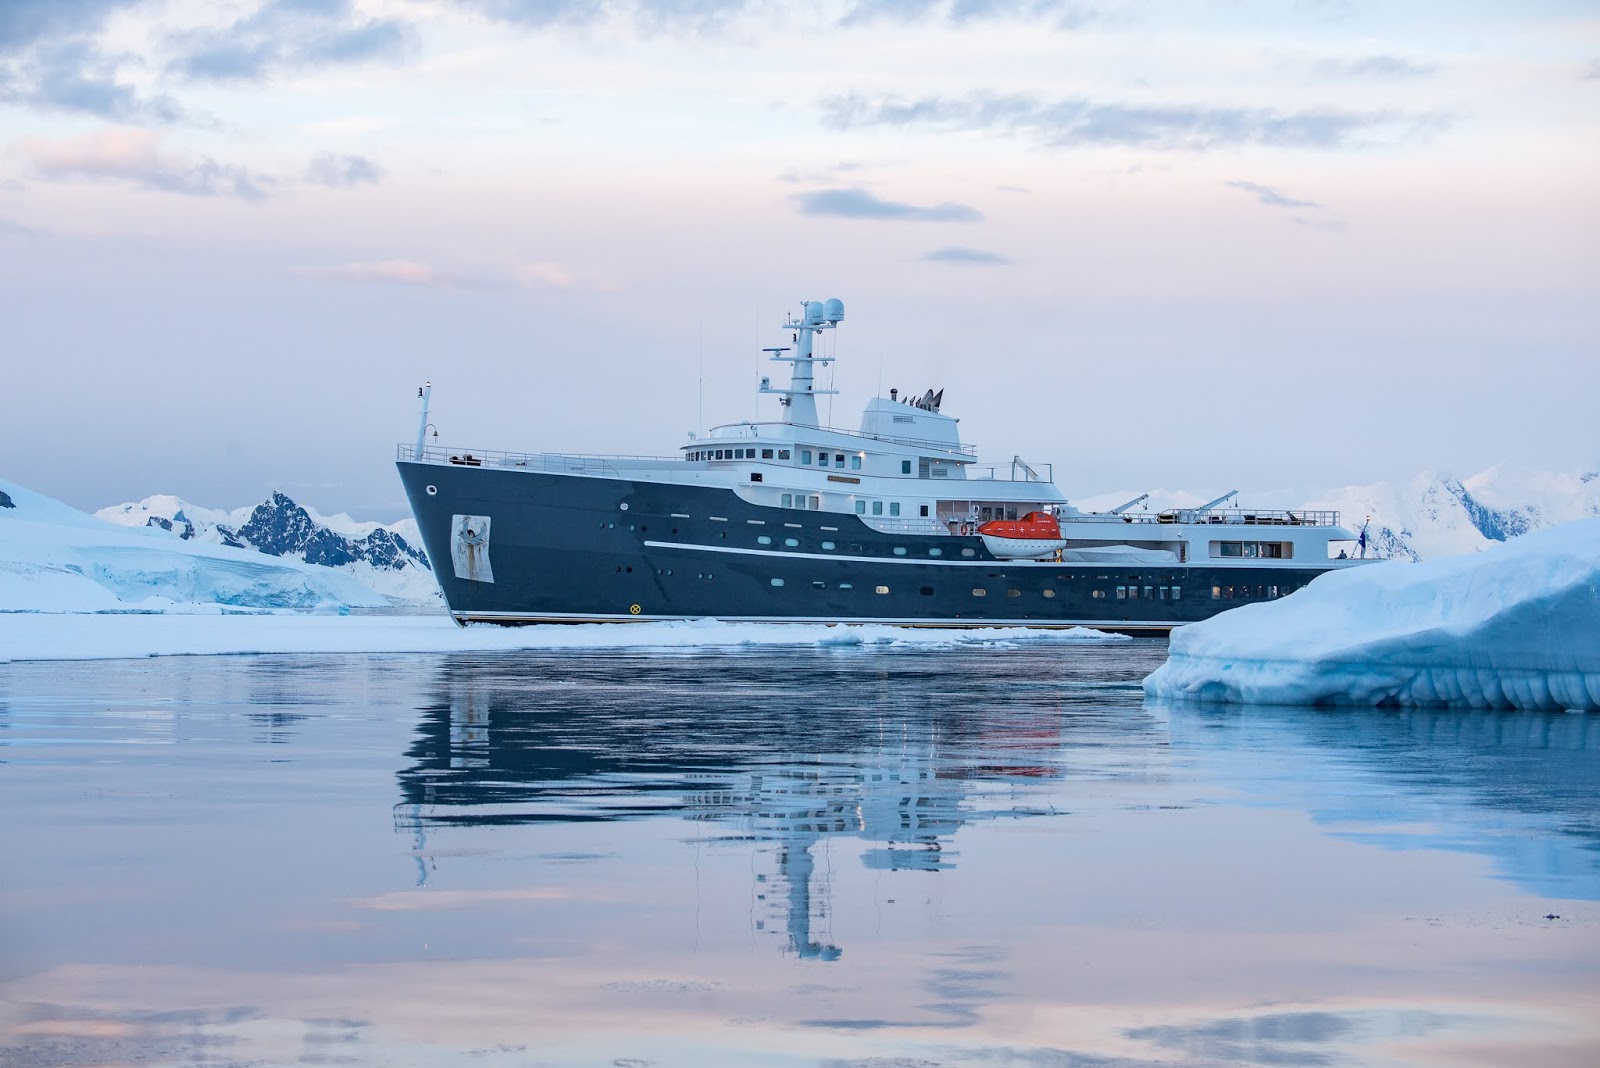 yacht race around antarctica